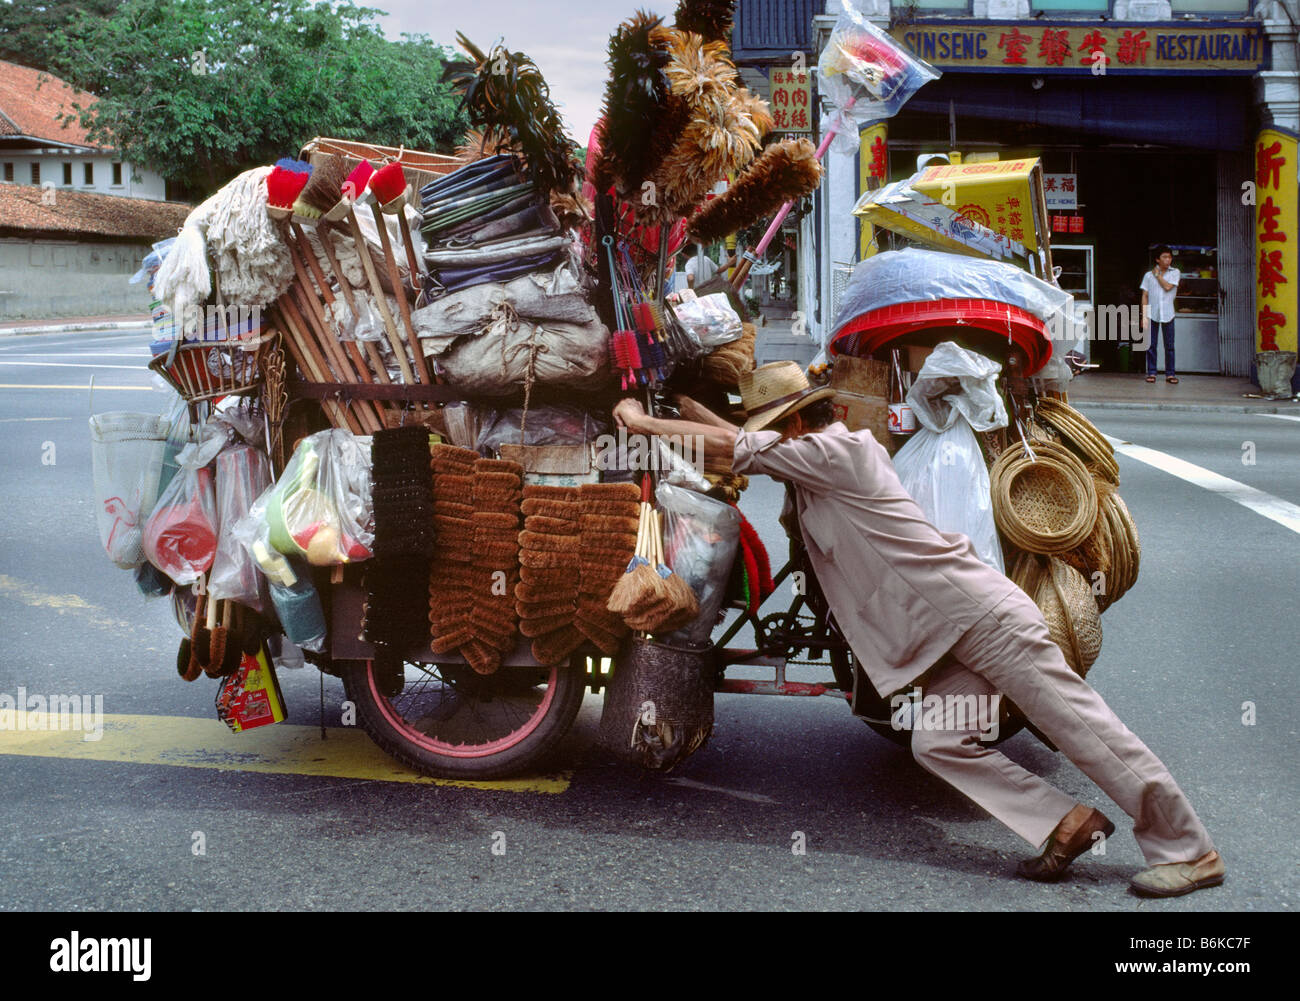 Peddler pushing heavy load in Singapore 2 Stock Photo